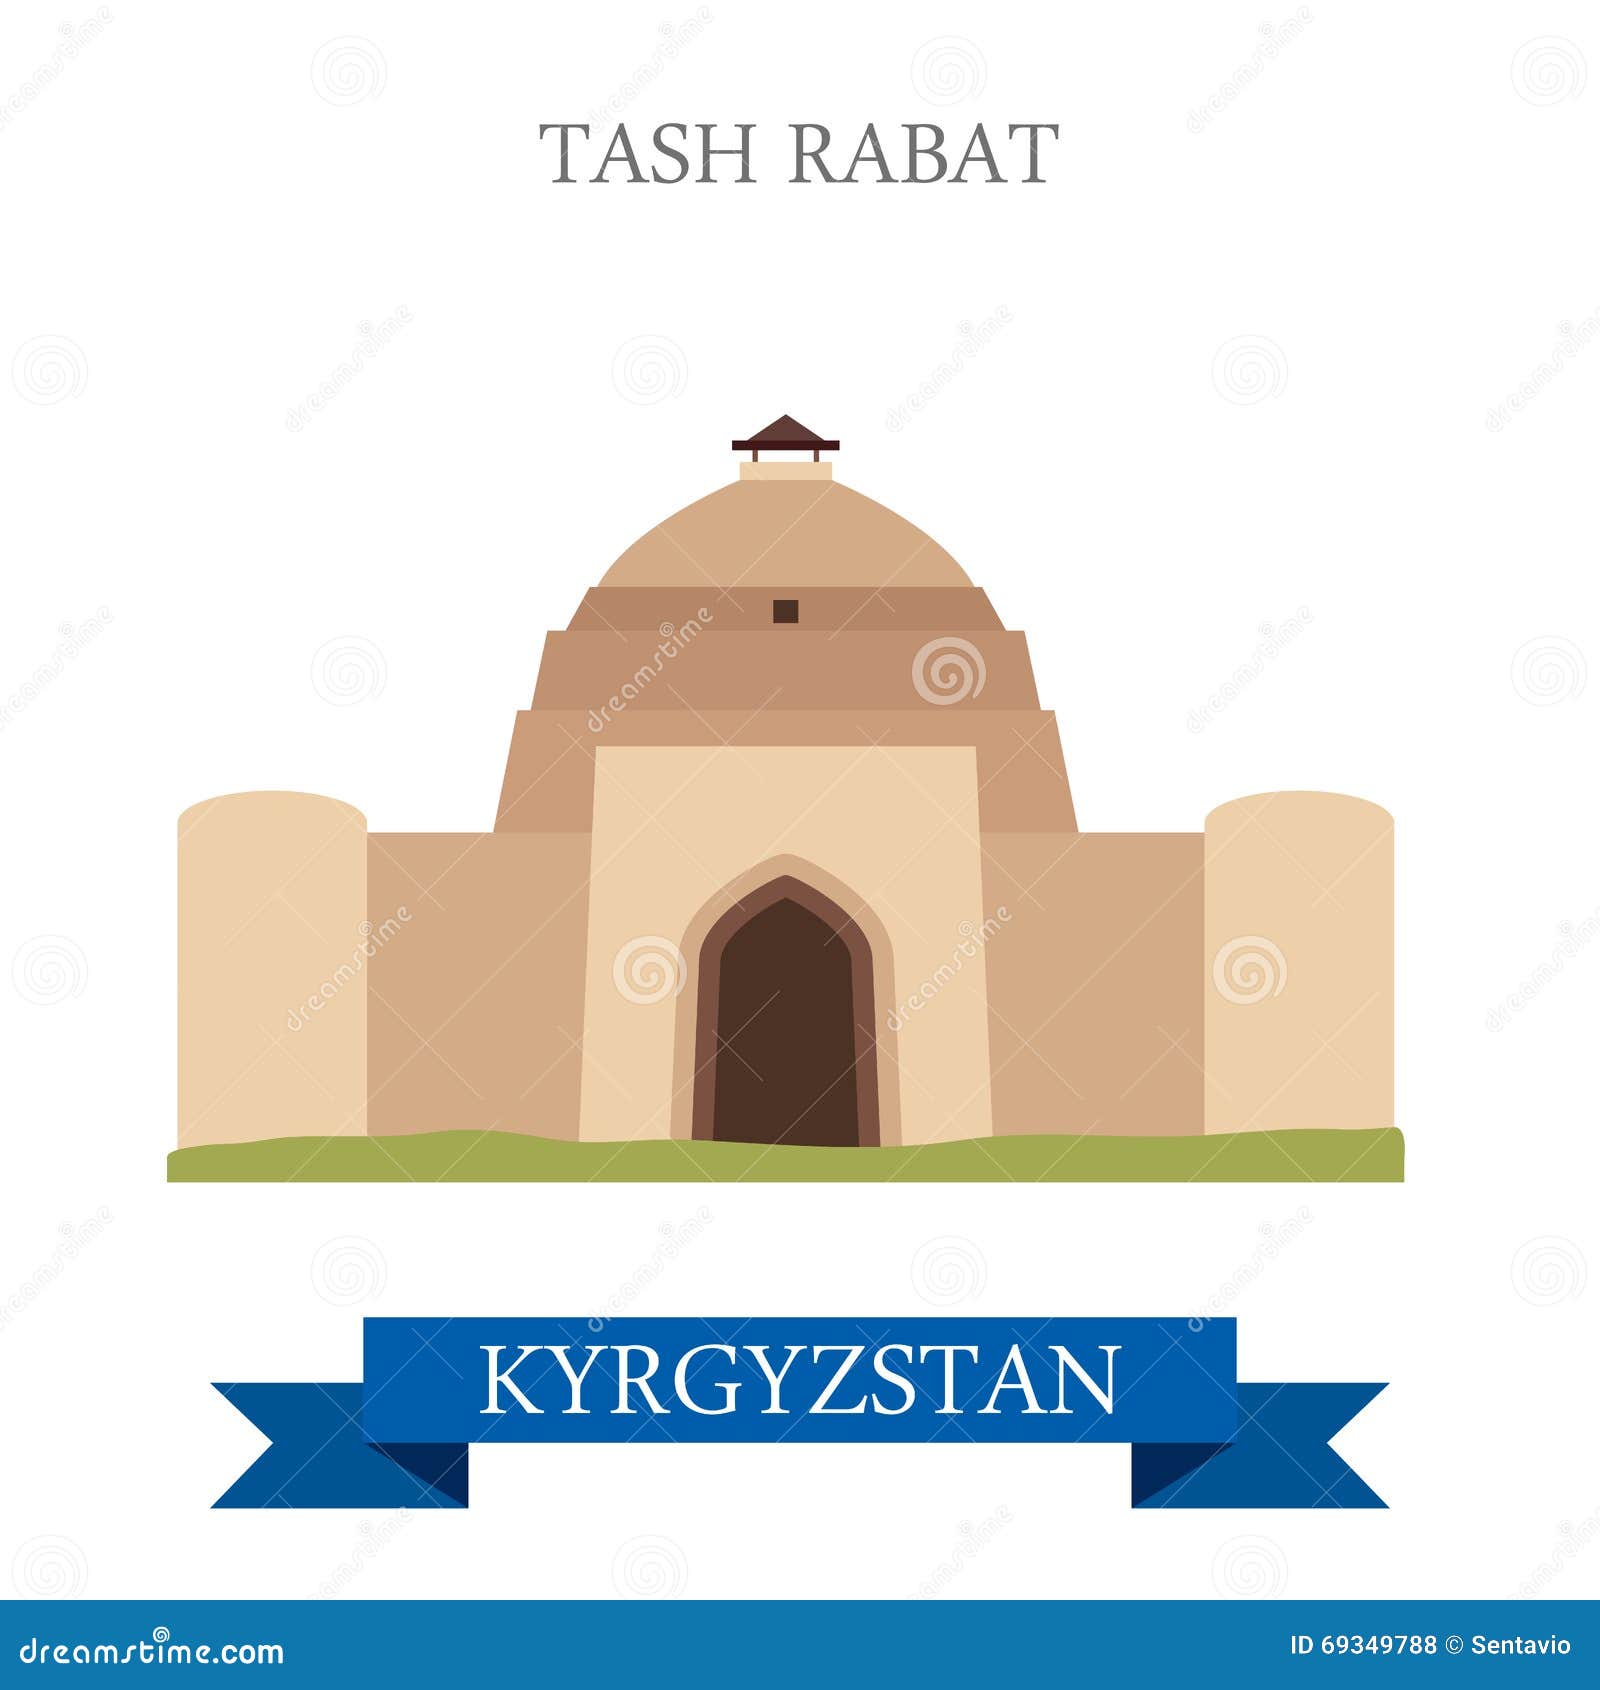 tash rabat in kyrgyzstan  flat attraction landmarks